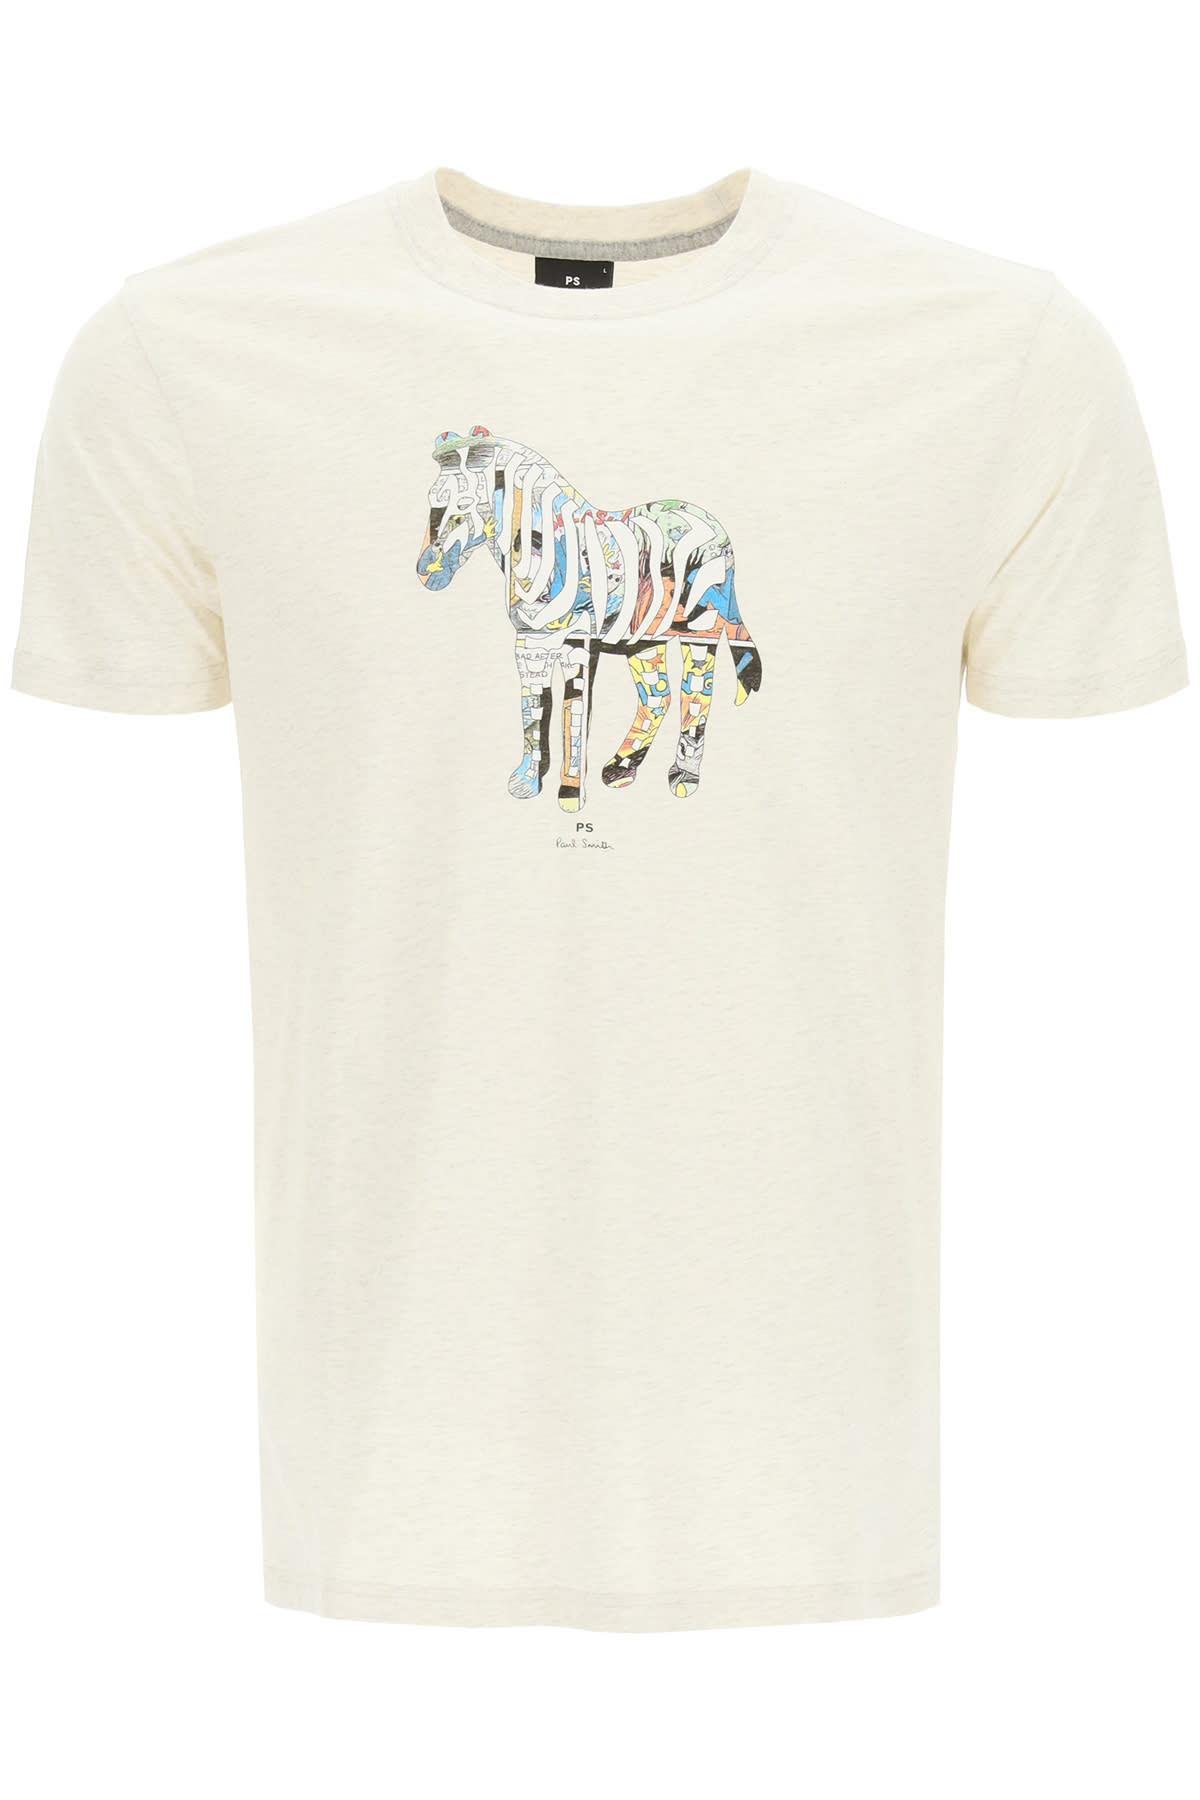 PS by Paul Smith Zebra Print T-shirt